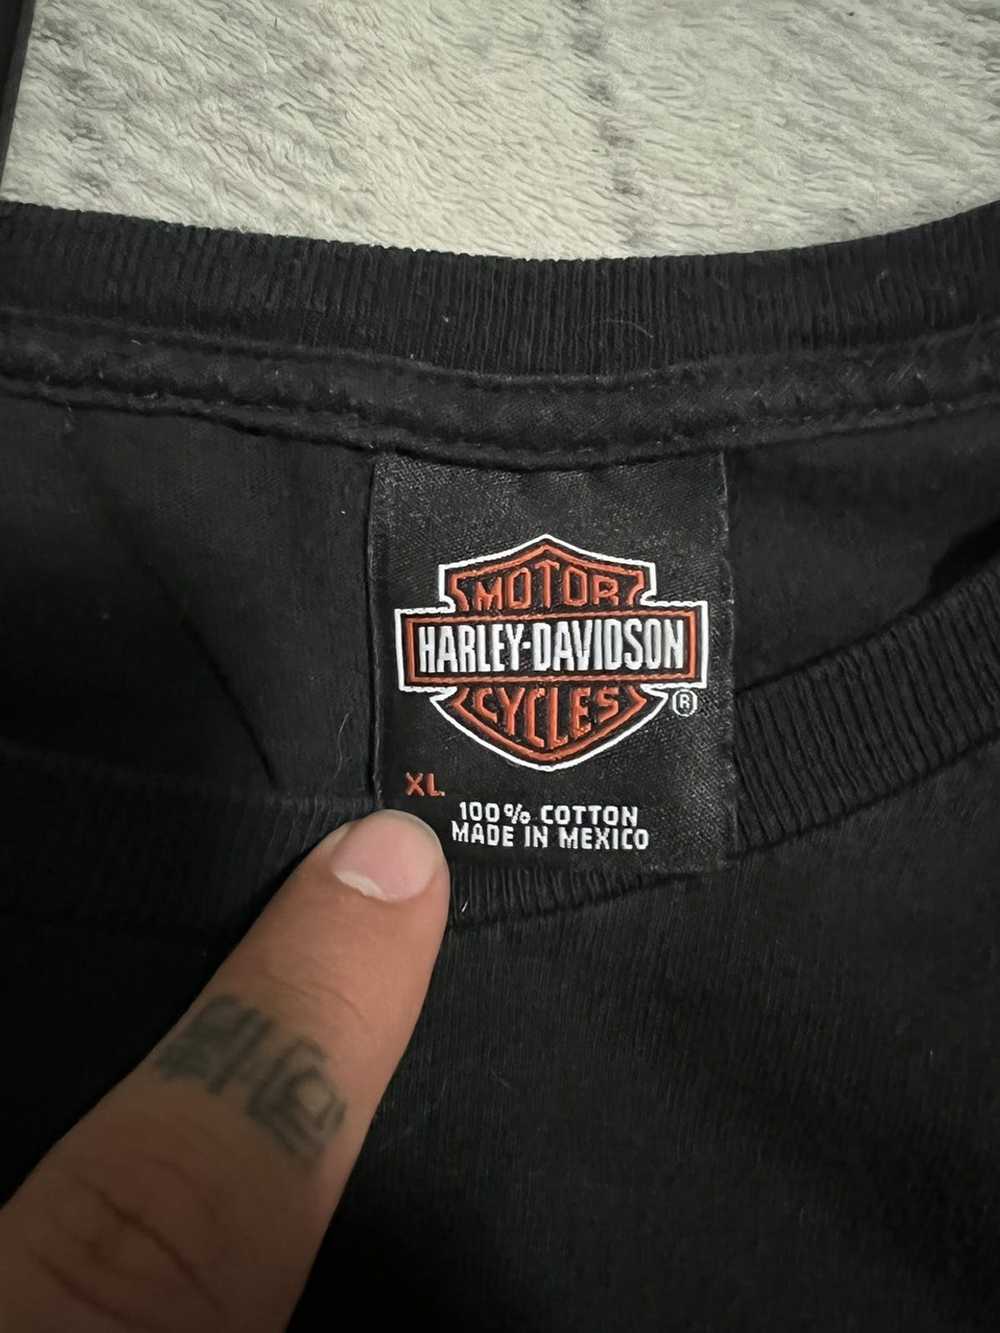 Harley Davidson Harley Davidson Tee - image 5